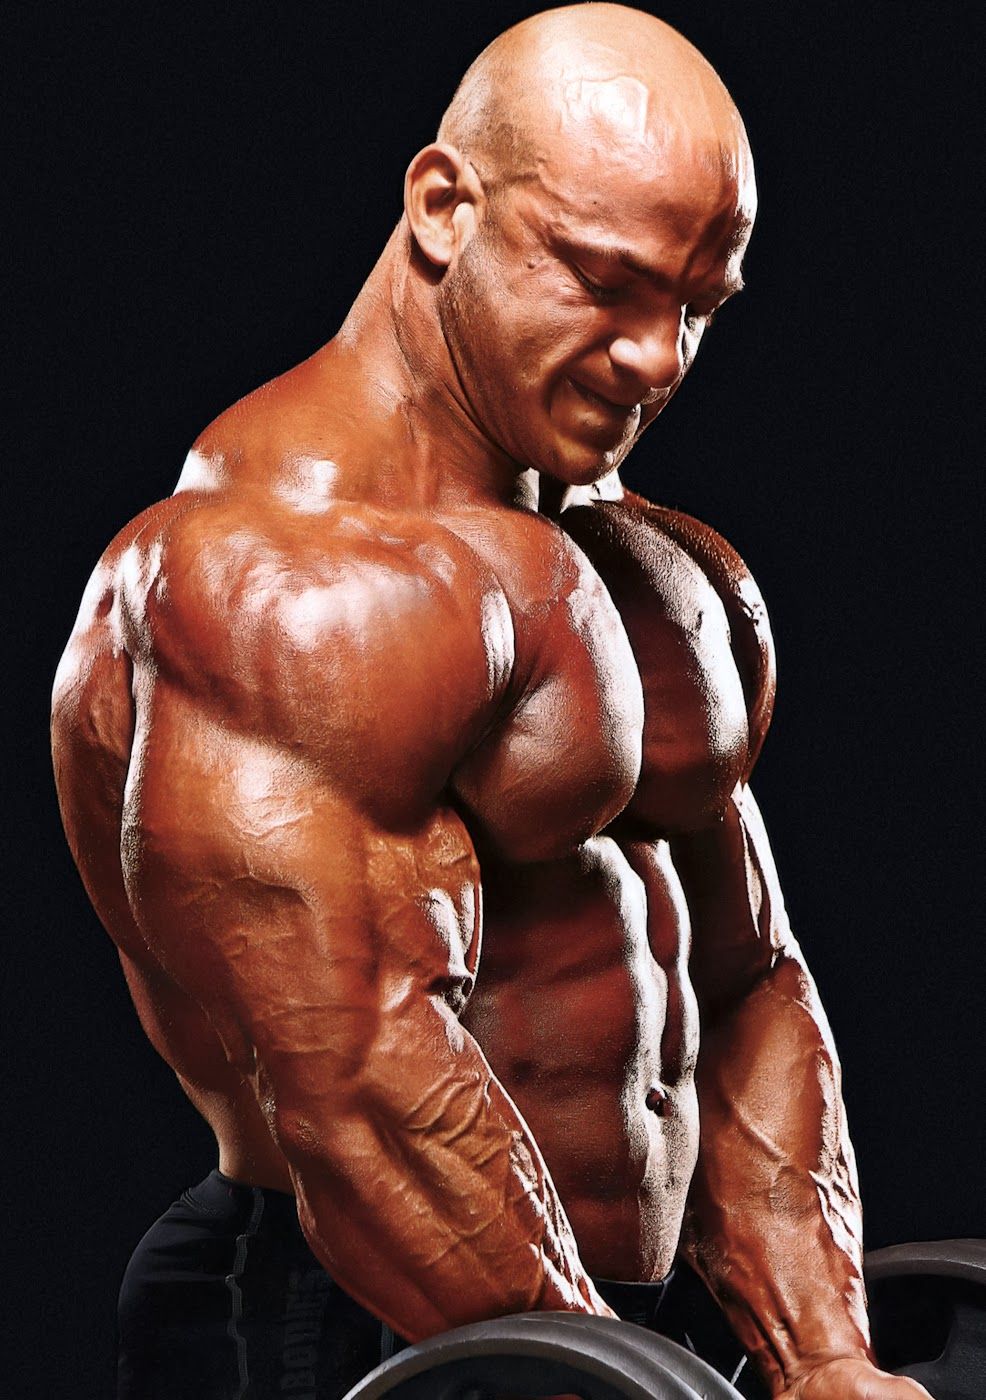 big ramy bodybuilder height Image Search Results. Bodybuilding, Bodybuilders men, Bodybuilding workouts